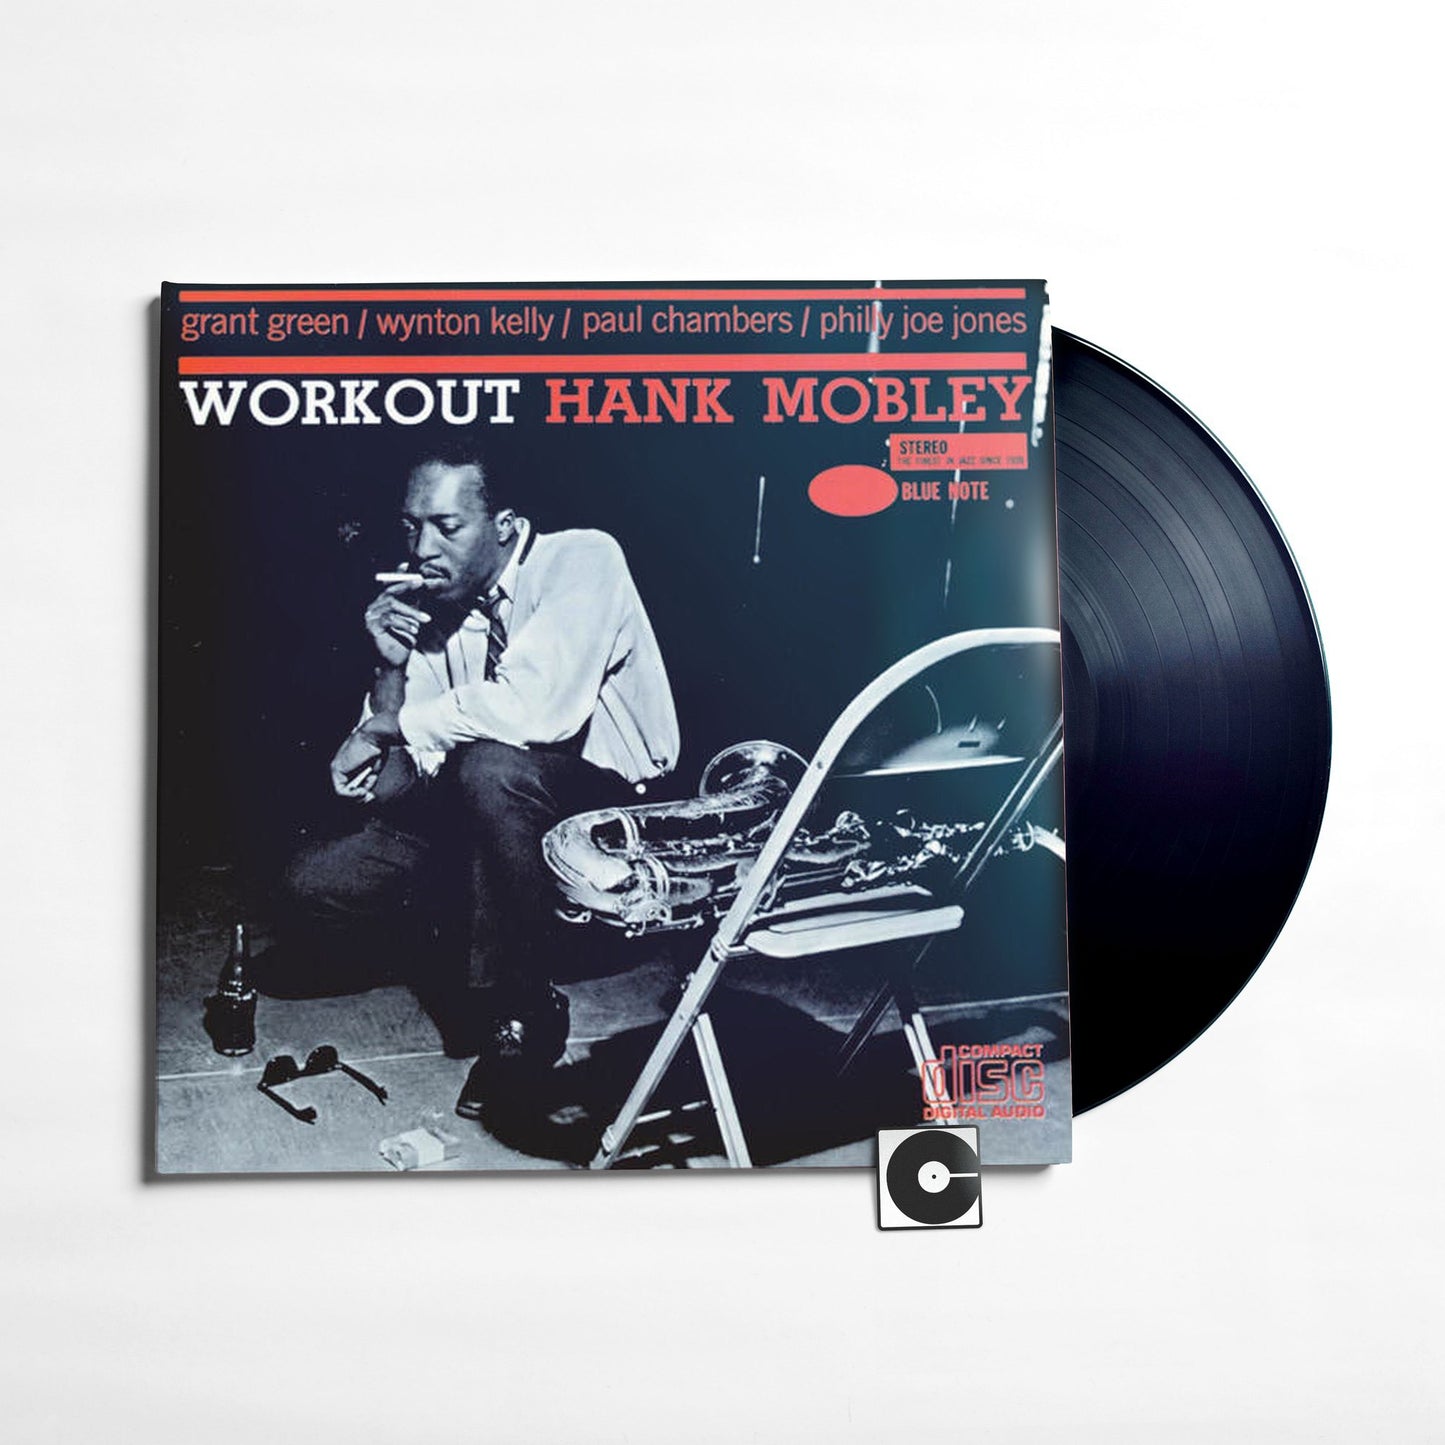 Hank Mobley - "Workout"